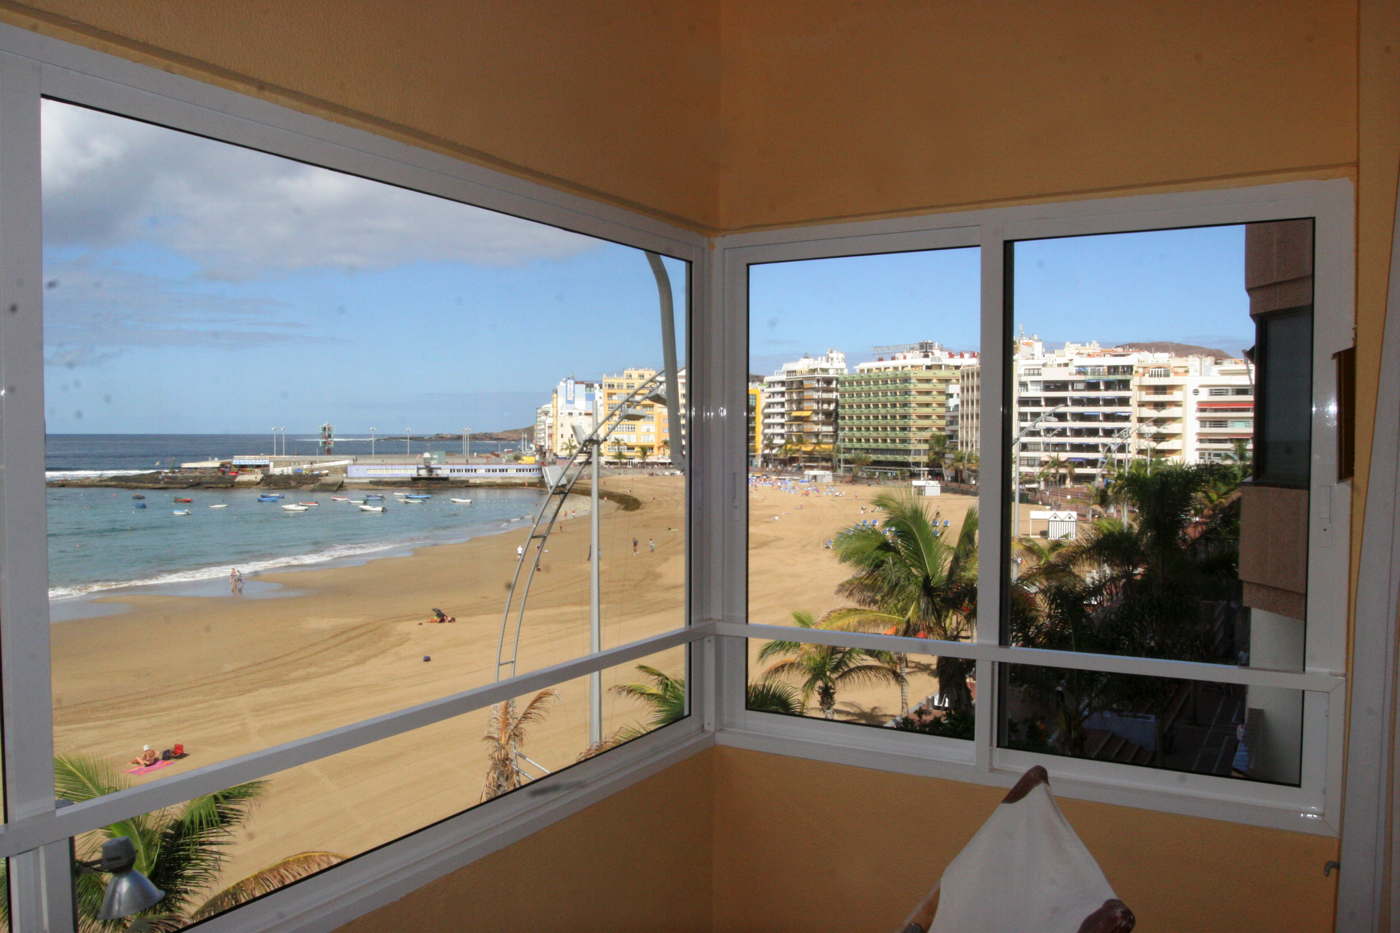 Holiday apartment at Las Canteras beach in Gran Canaria